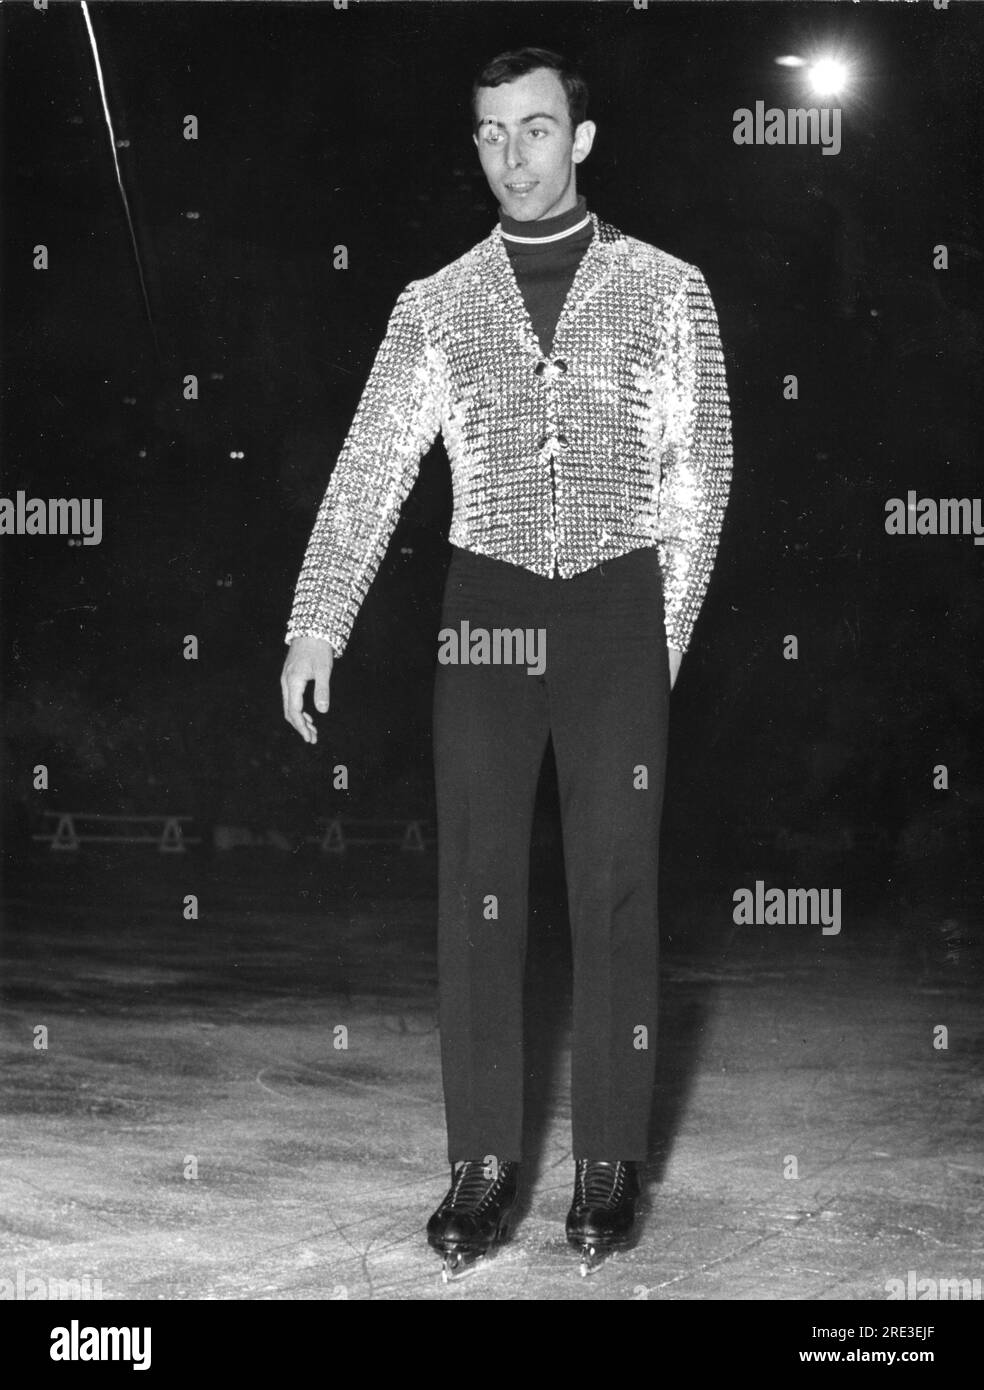 Wood, Timothy Lyle 'Tim', * 21,6.1948, amerikanischer Sportler (Eiskunstläufer), bei Sportveranstaltung, um 1970, ADDITIONAL-RIGHTS-CLEARANCE-INFO-NOT-AVAILABLE Stockfoto